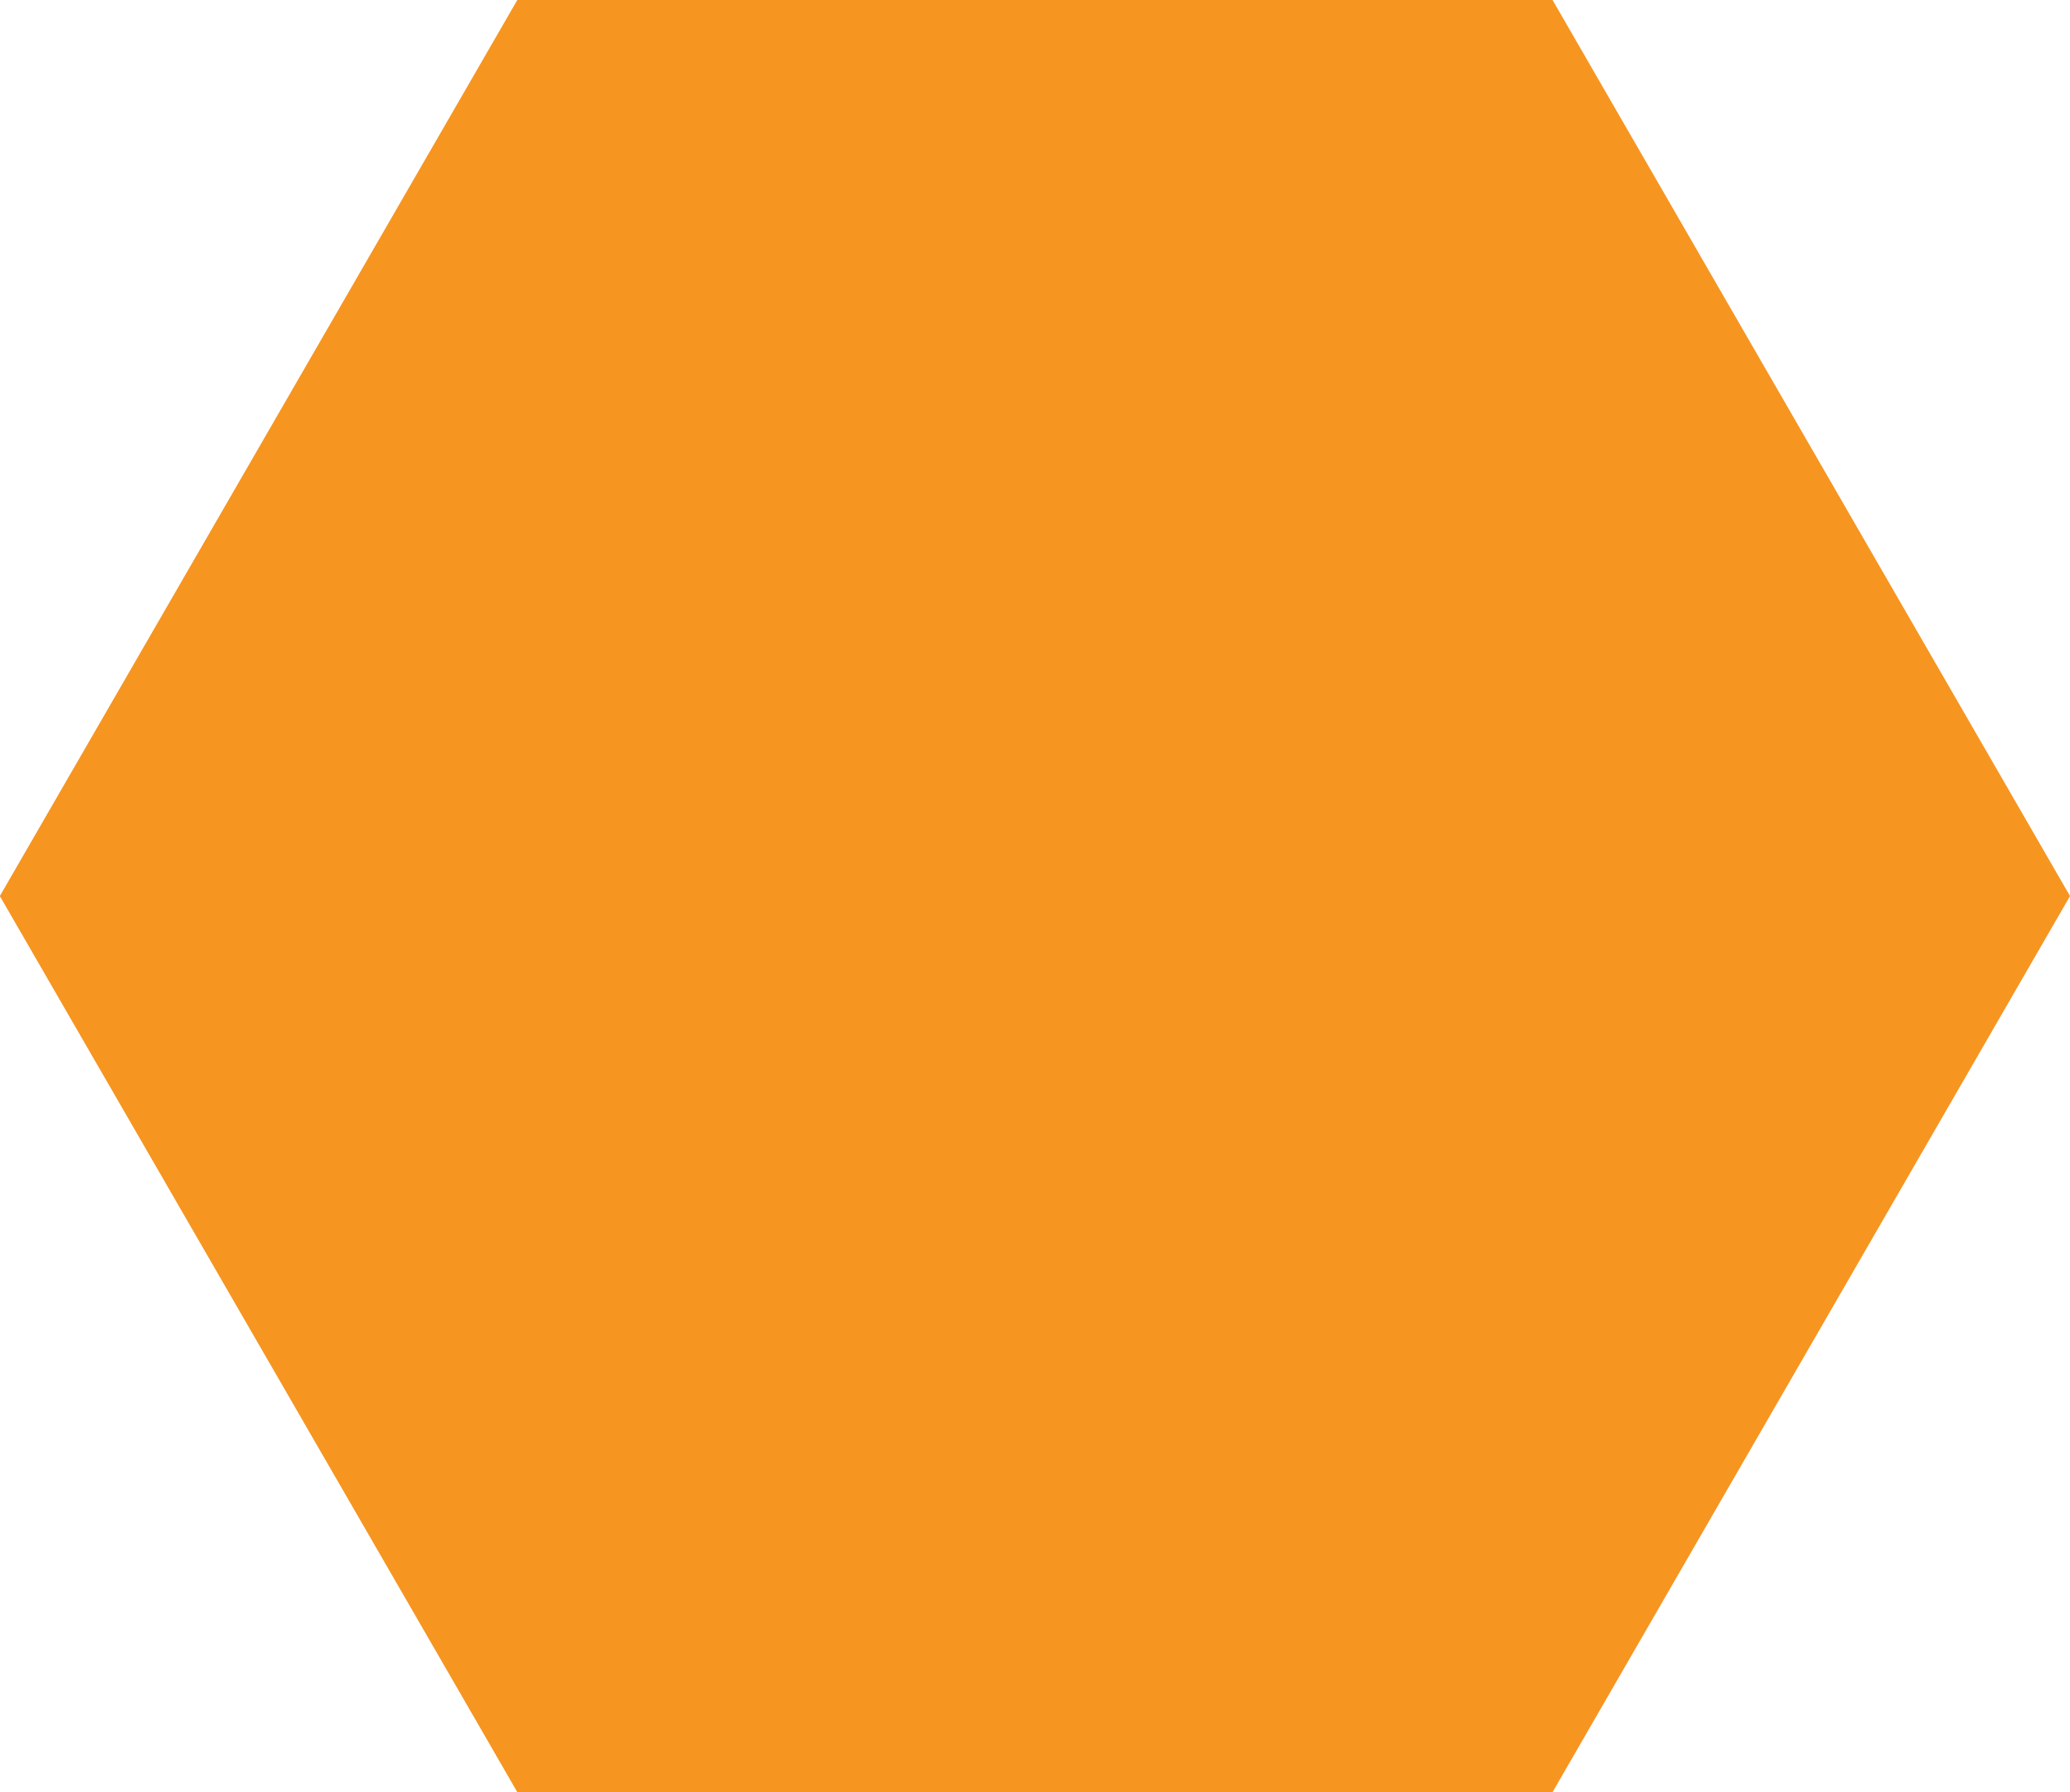 Yellow Hexagon PNG HD Quality